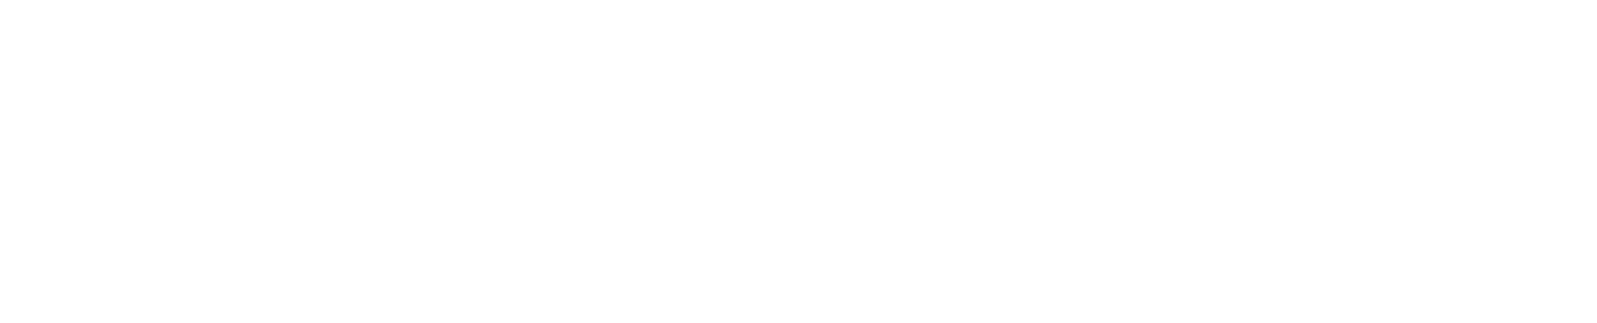 Bright Health logo large for dark backgrounds (transparent PNG)